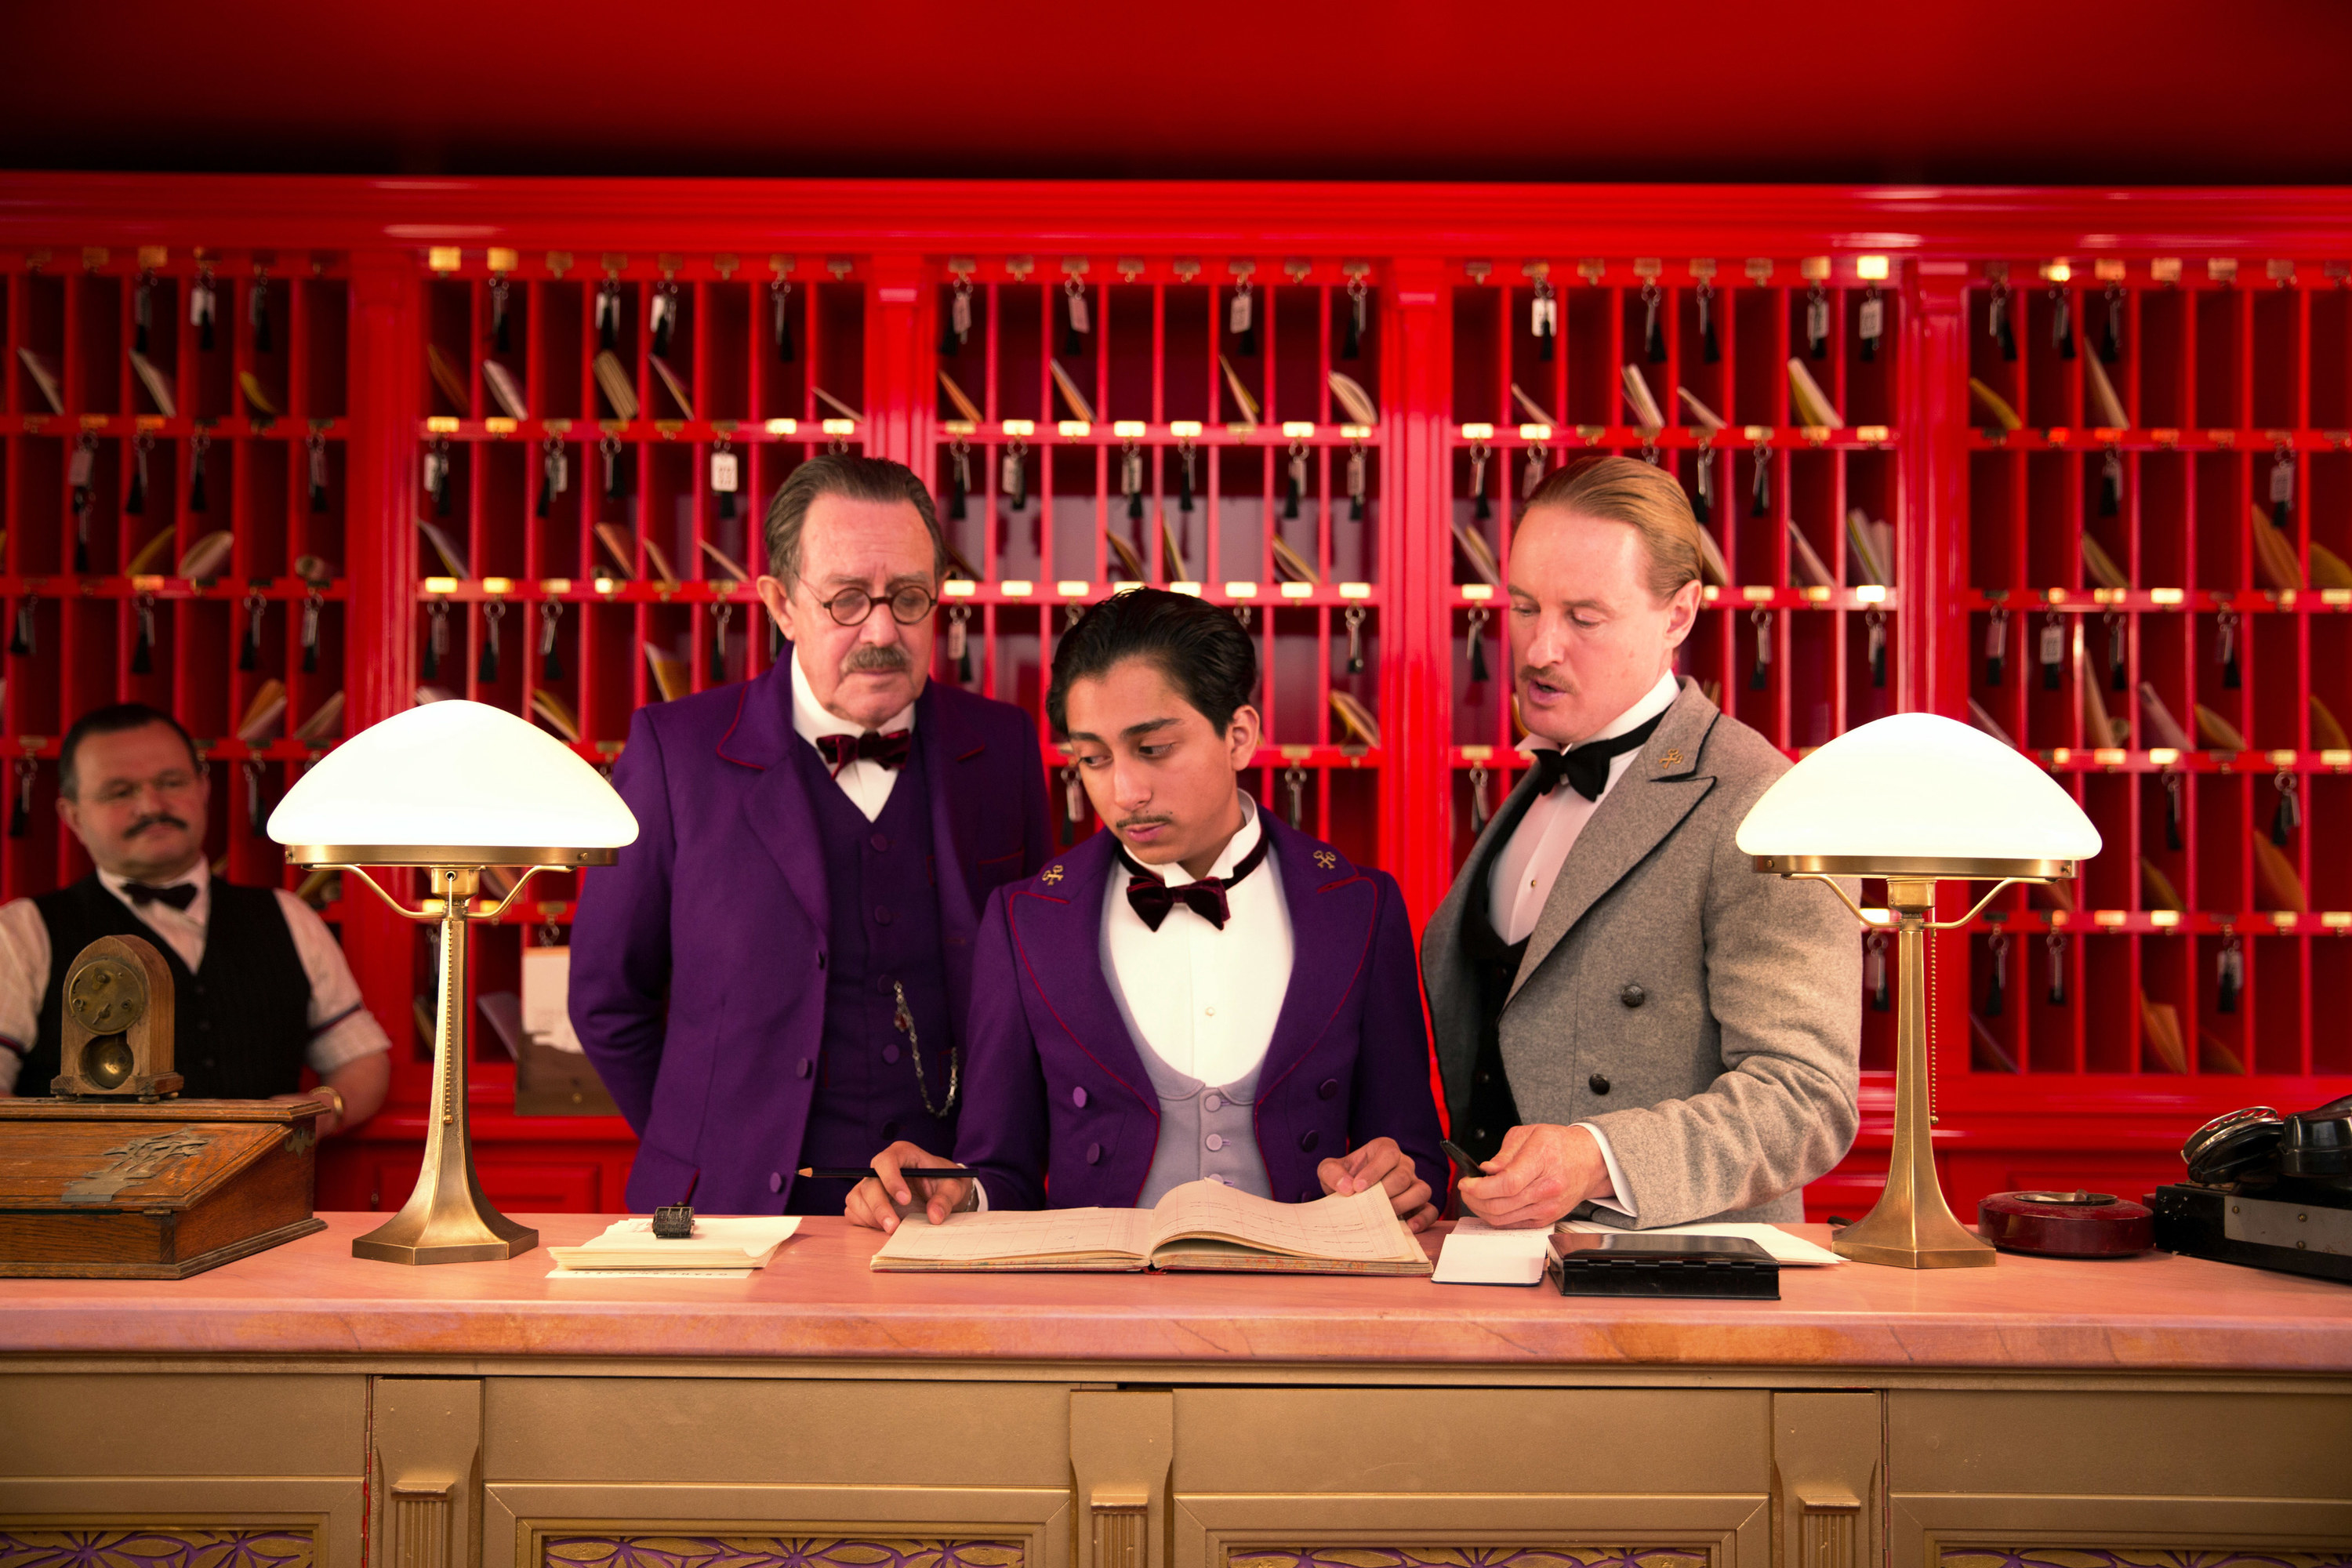 Tom Wilkinson, Tony Revolori, Owen Wilson in The Grand Budapest Hotel